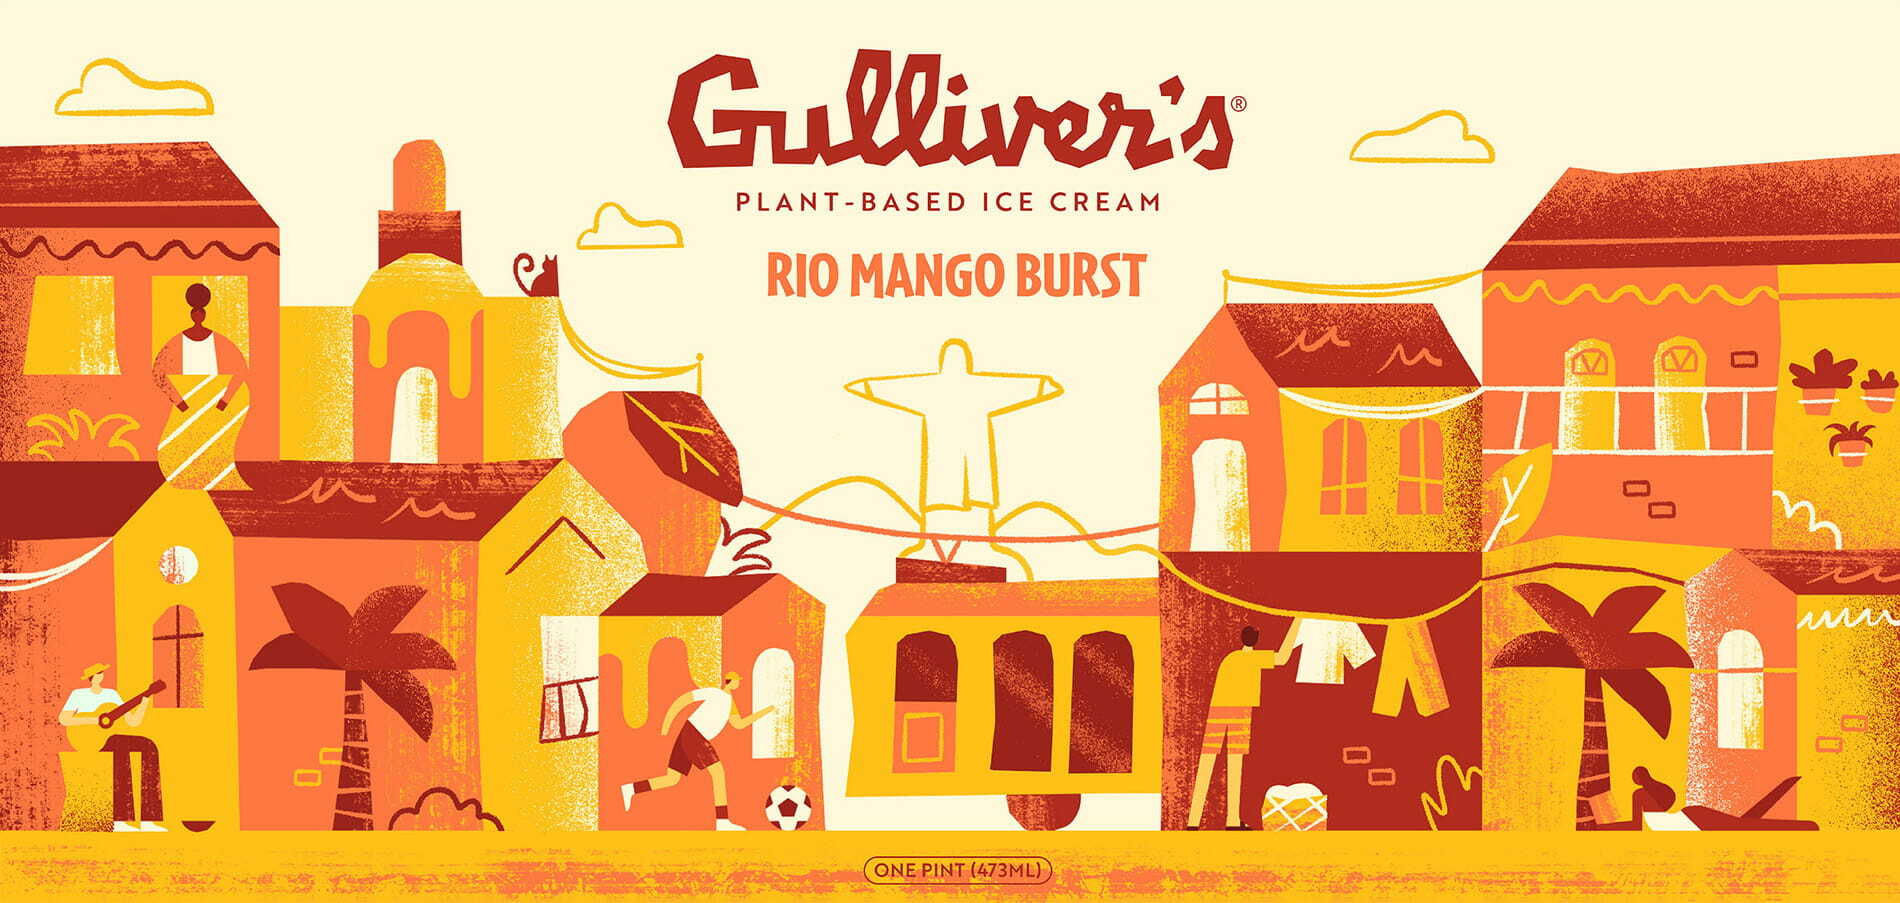 Gulliver's Ice Cream